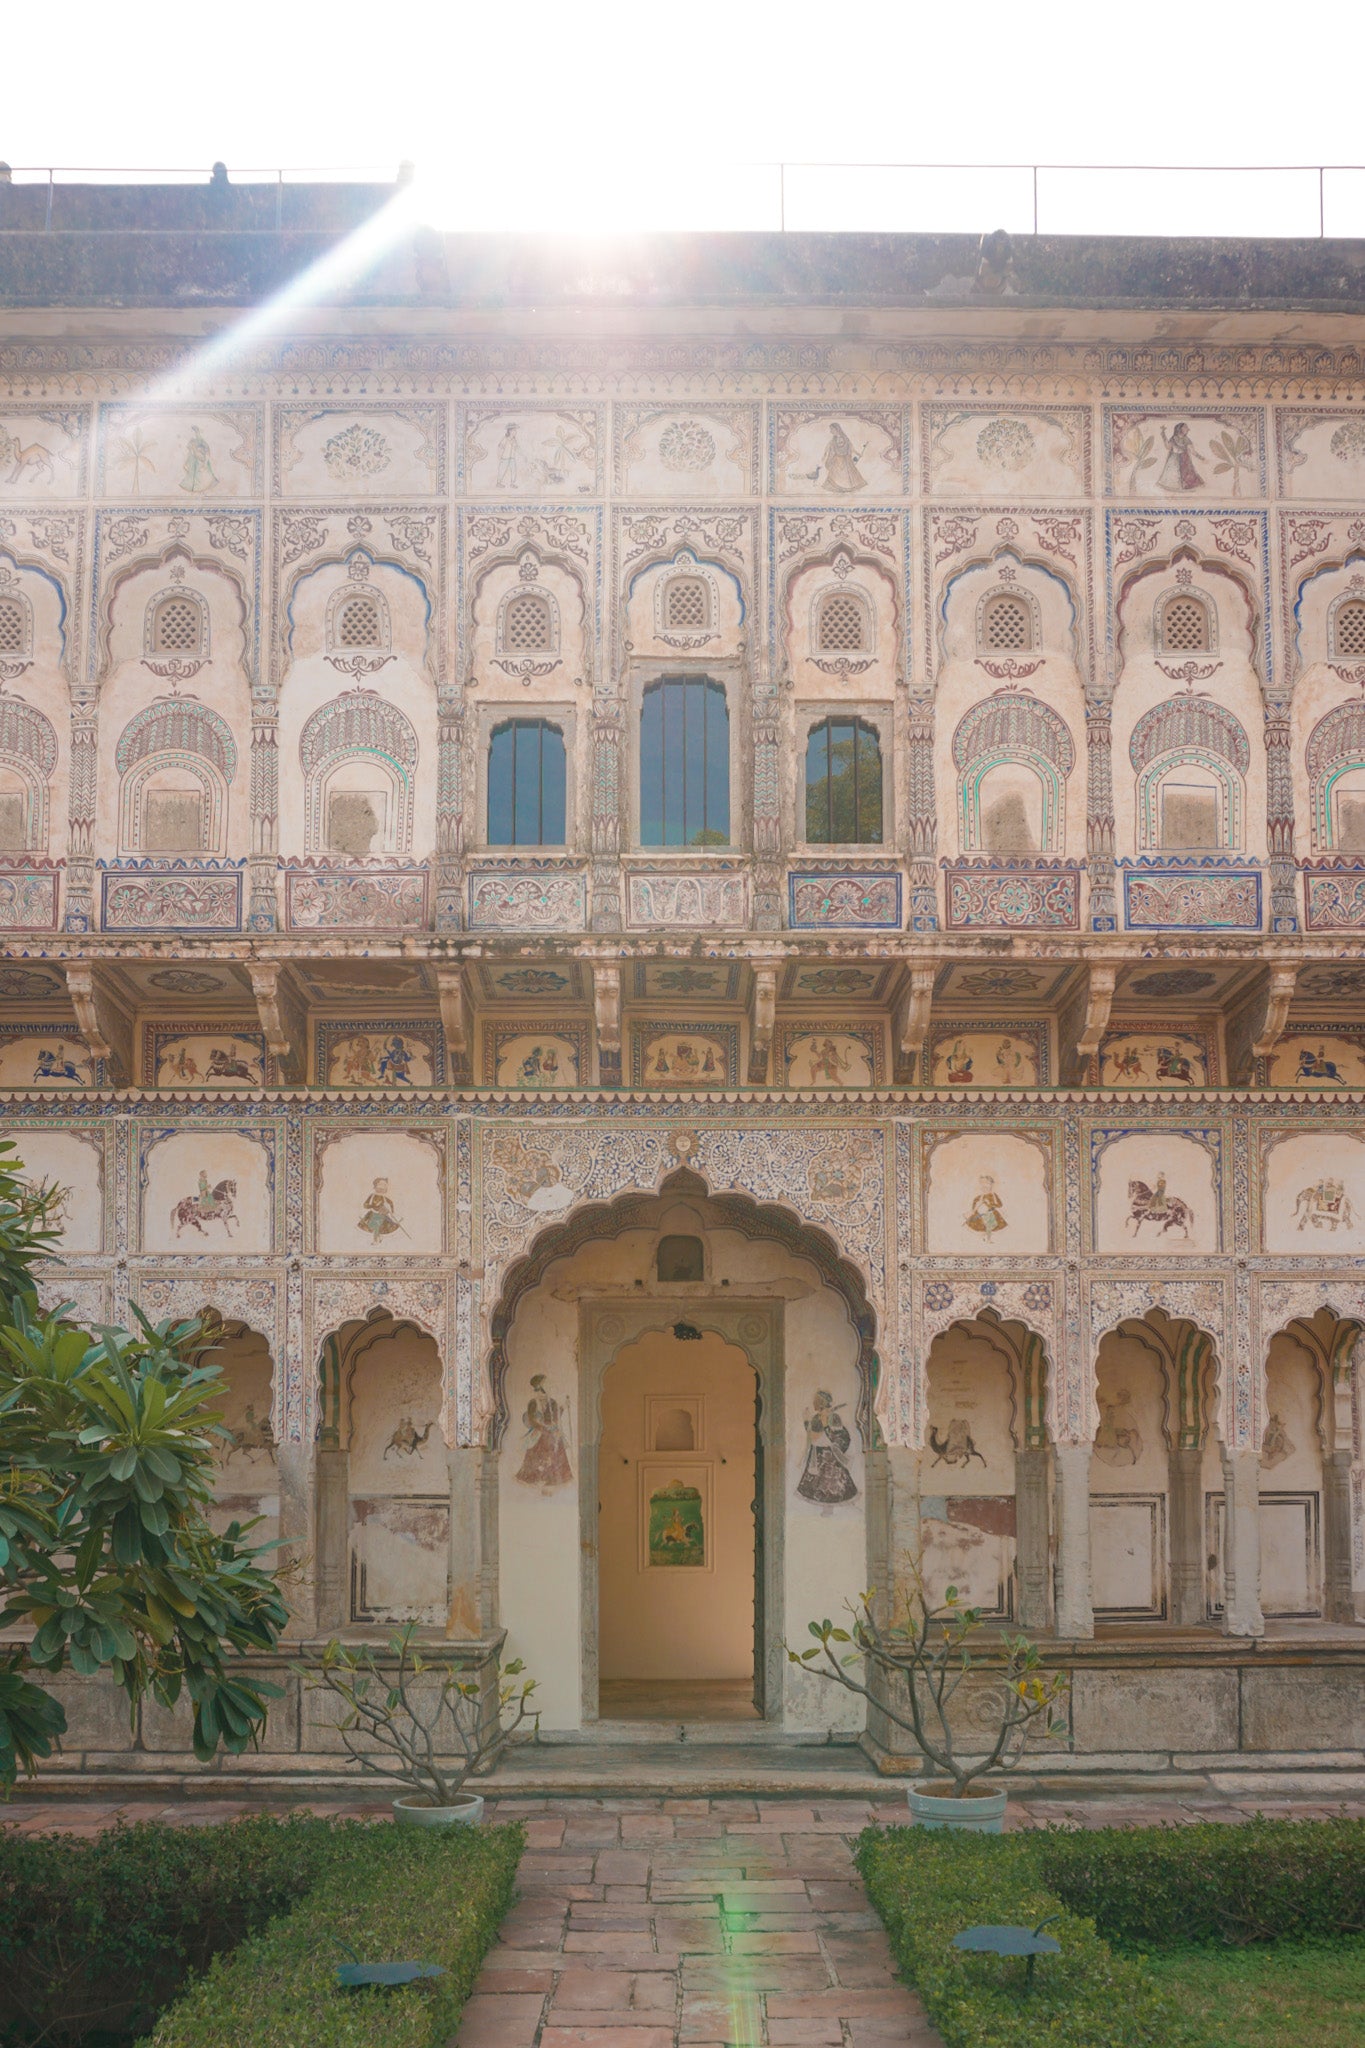 Deeppura Garh facade in India with painted frescoes